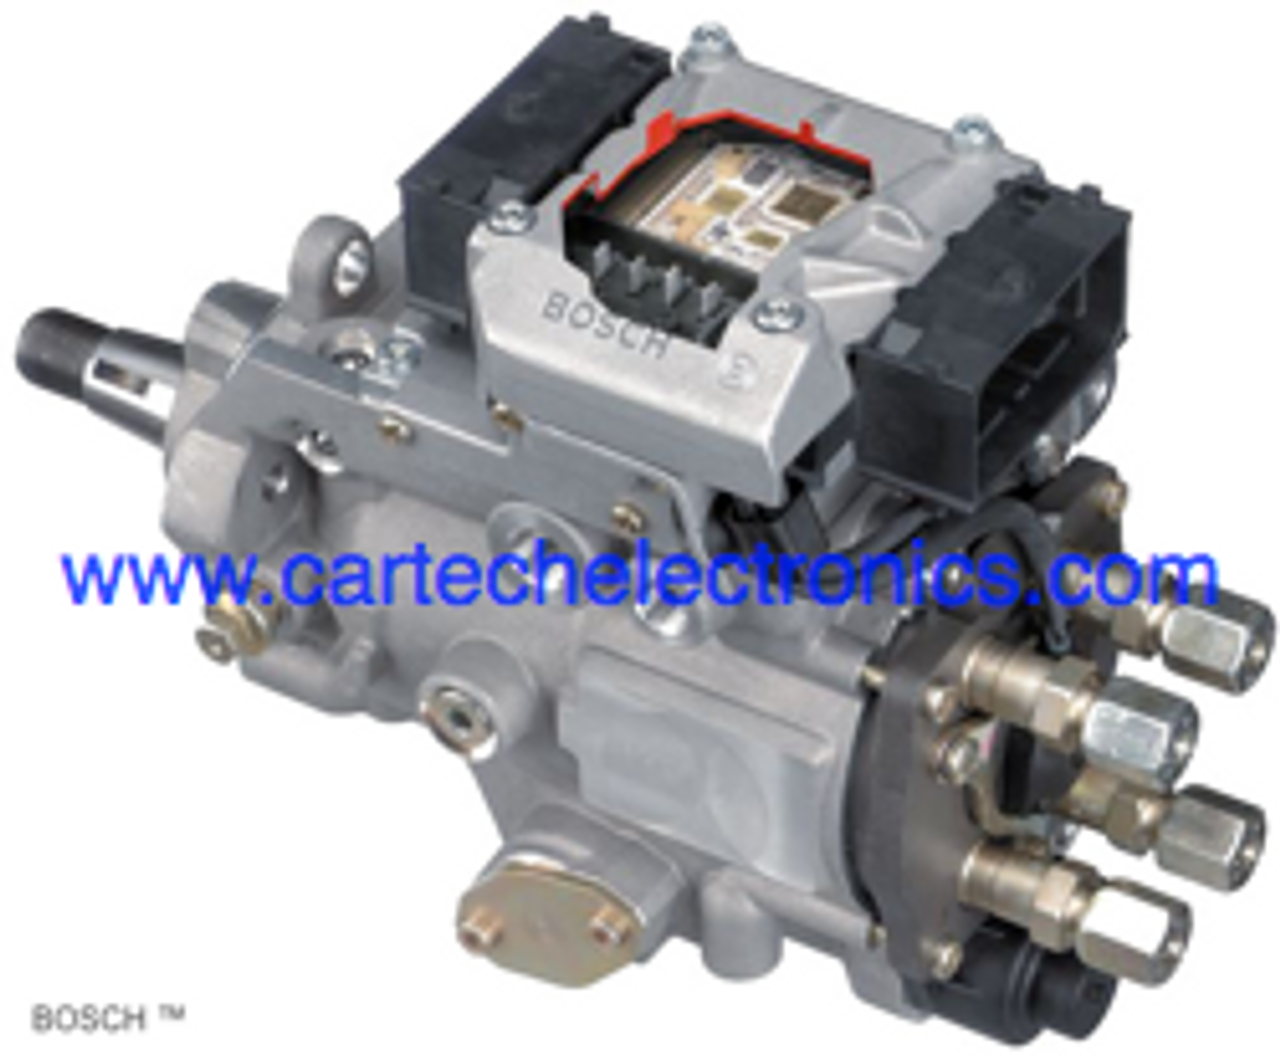 Vauxhall Opel PSG16 Diesel Fuel Pump ECU Reset Service for PSG 16 Pumps